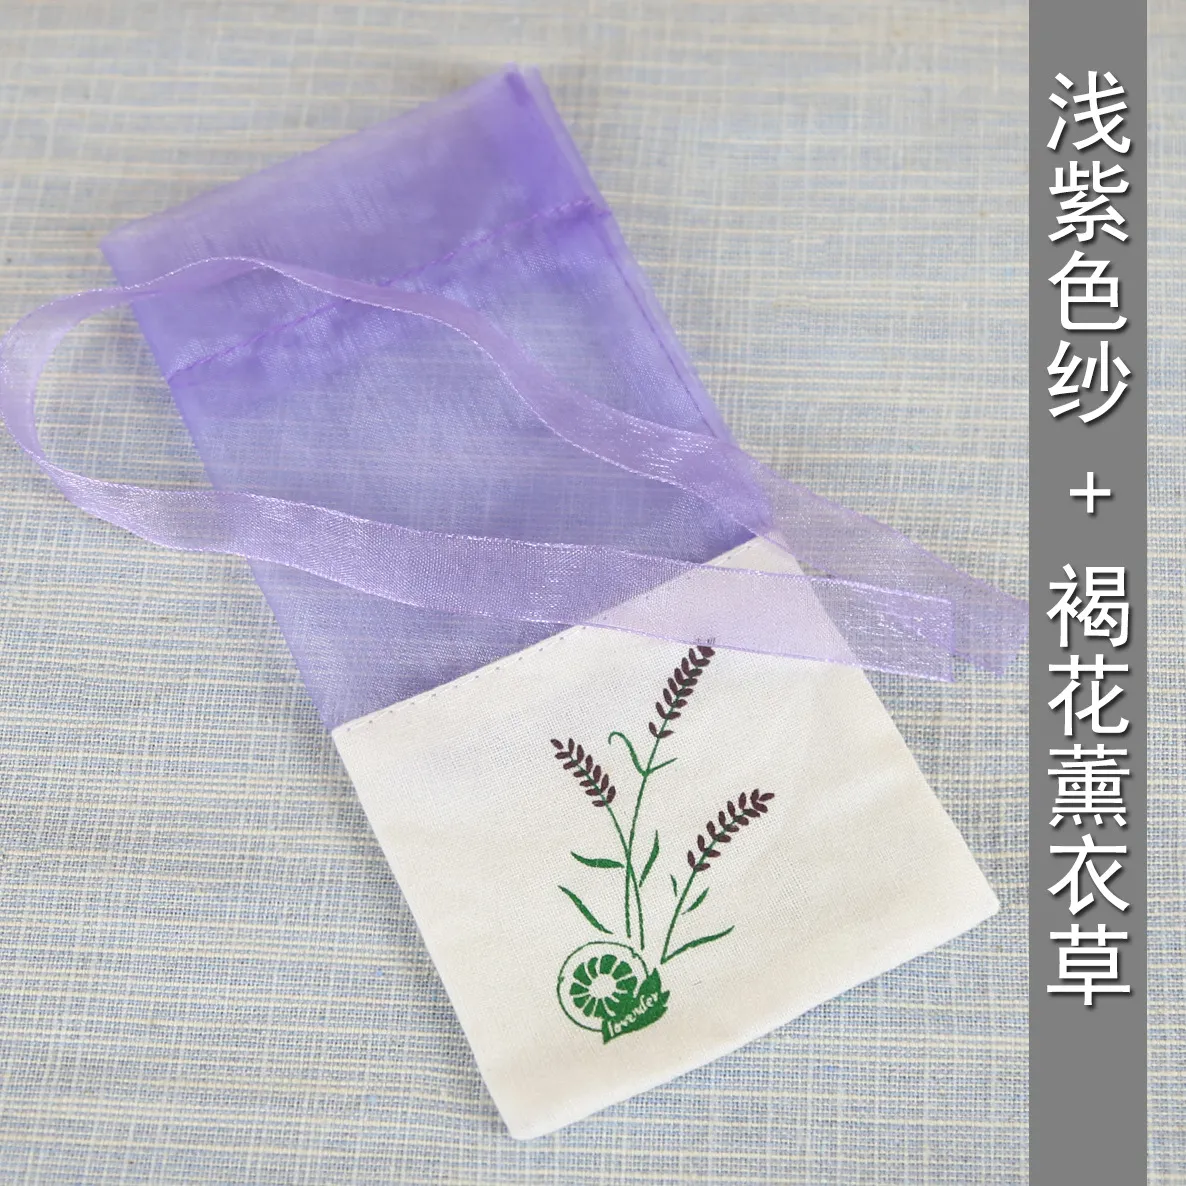 Purple Cotton Organza Lavender Sachet Bag Diy Dried Flower Package Bag Wedding Party bbyver bdesports